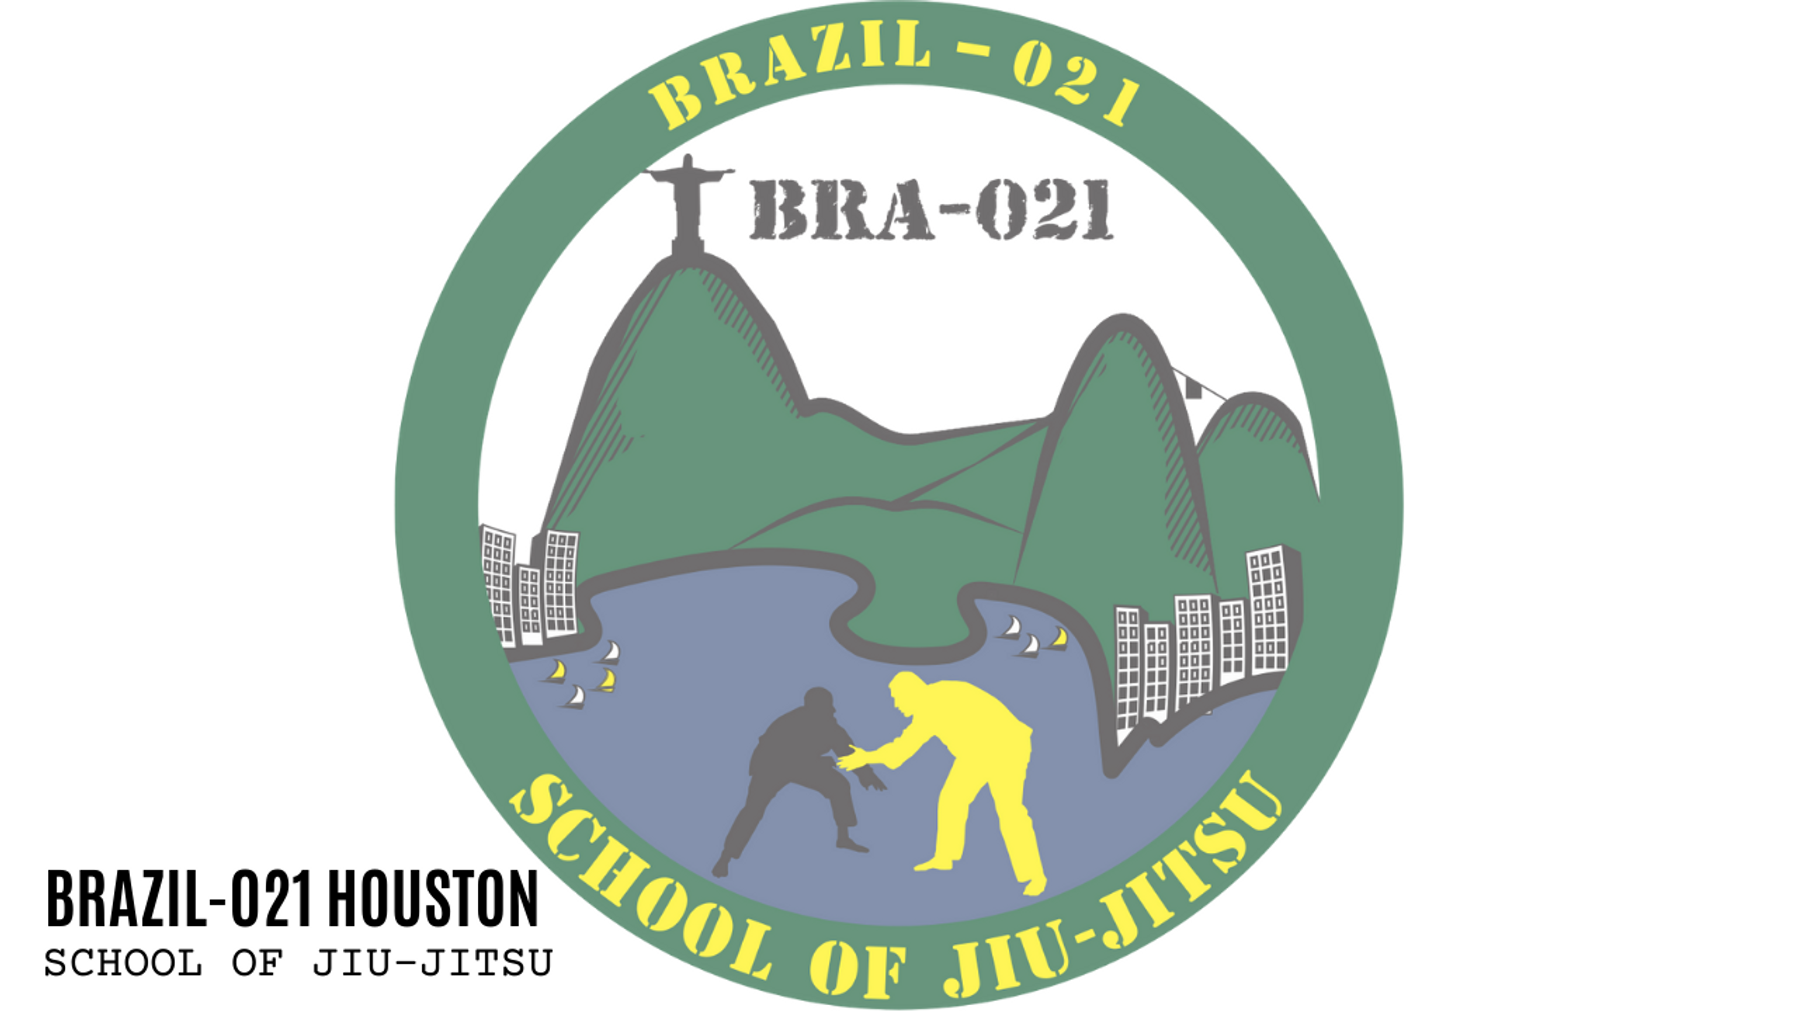 Brazil-021 School of Jiu-Jitsu (Houston)